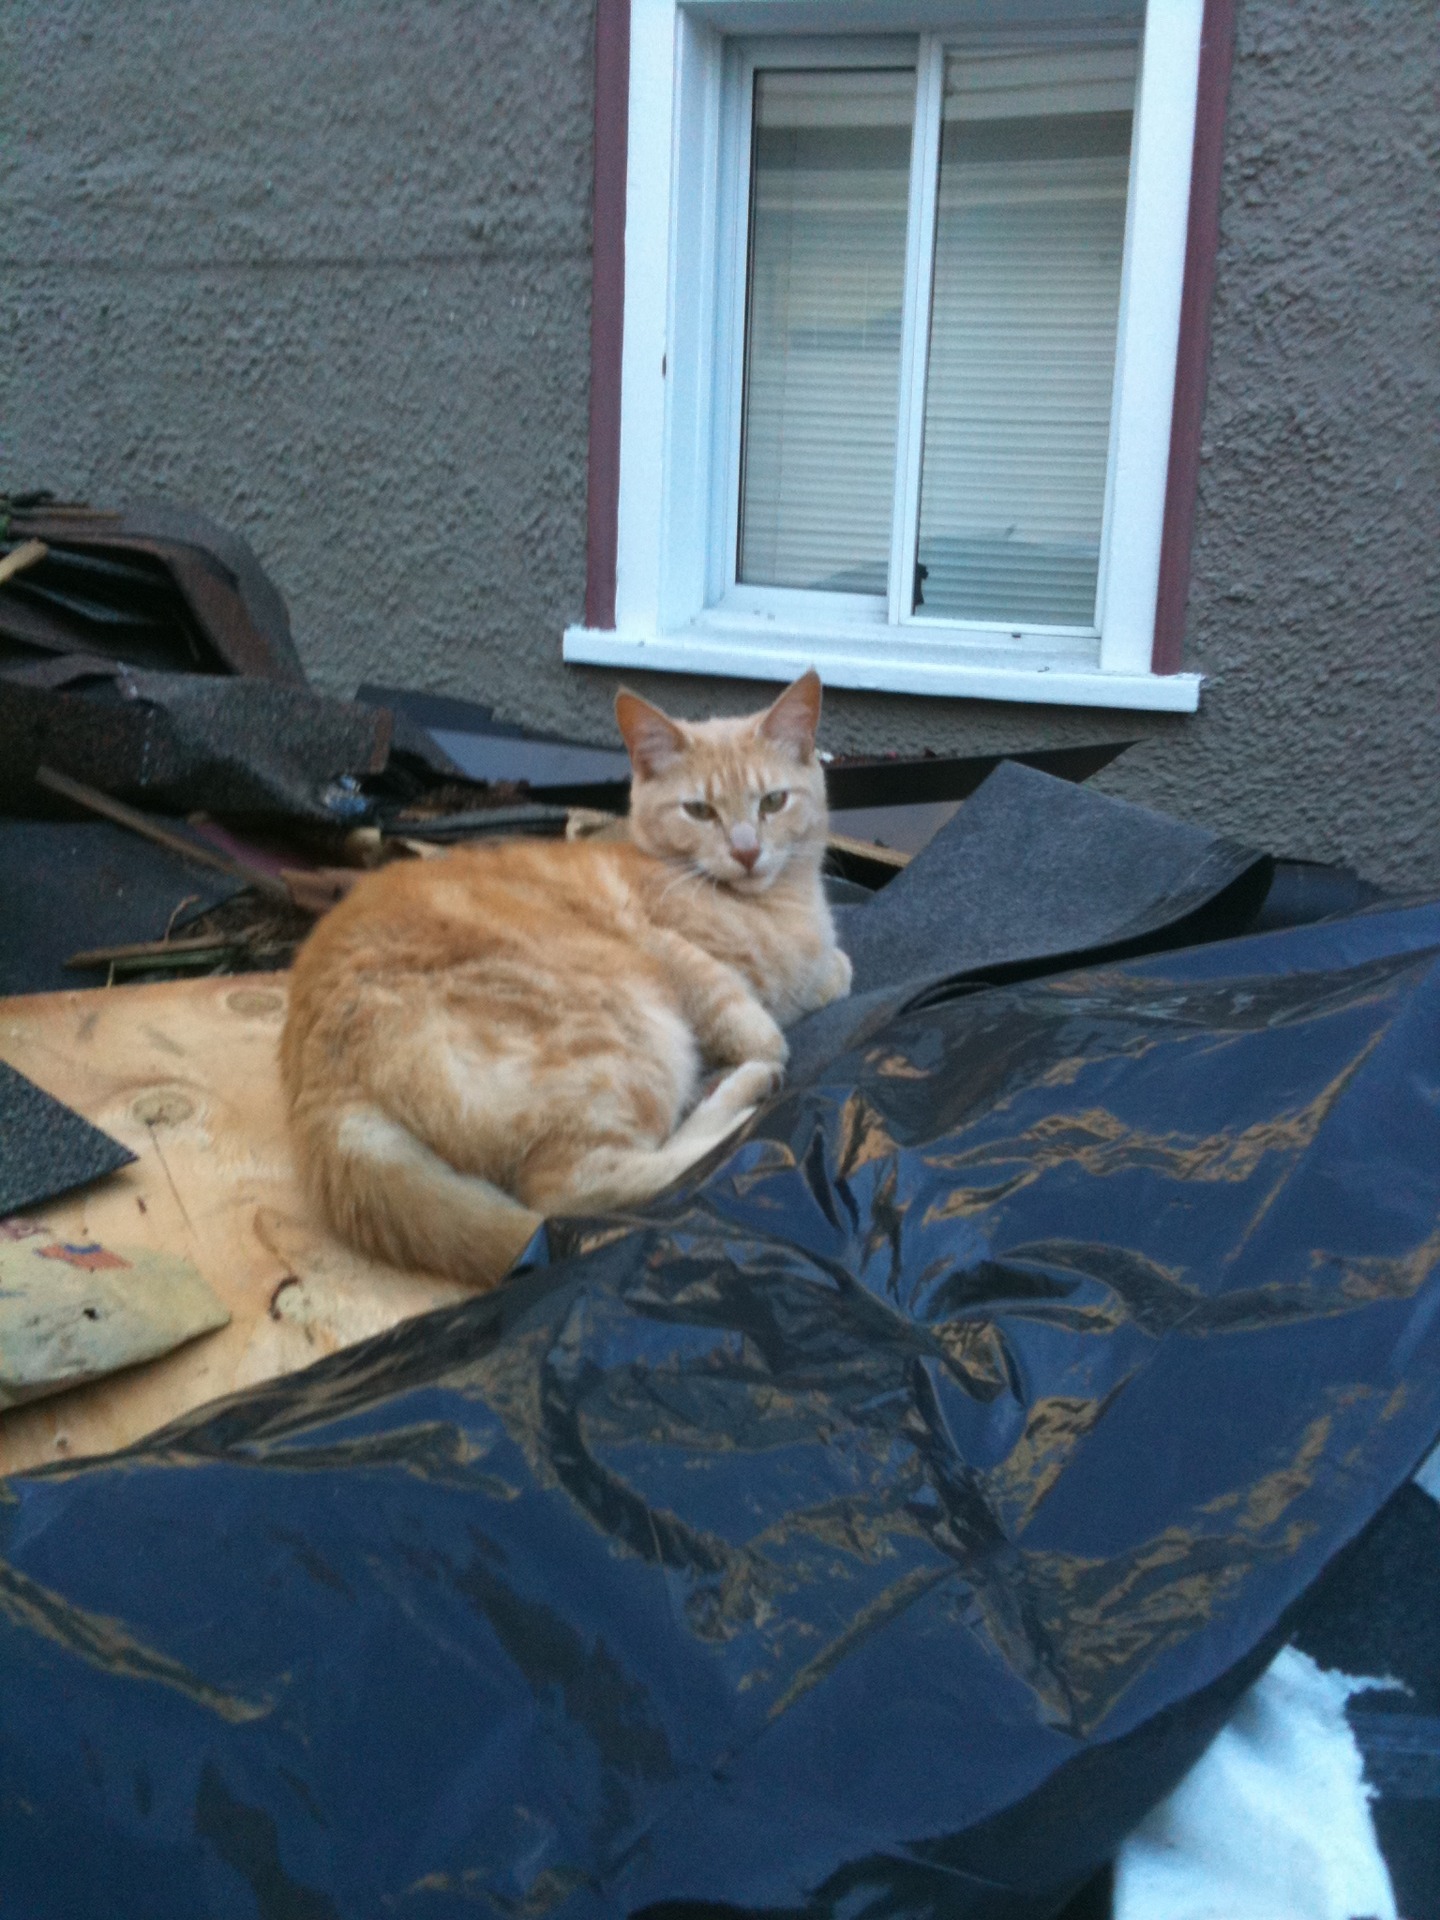  Ralph sitting on a dumpster